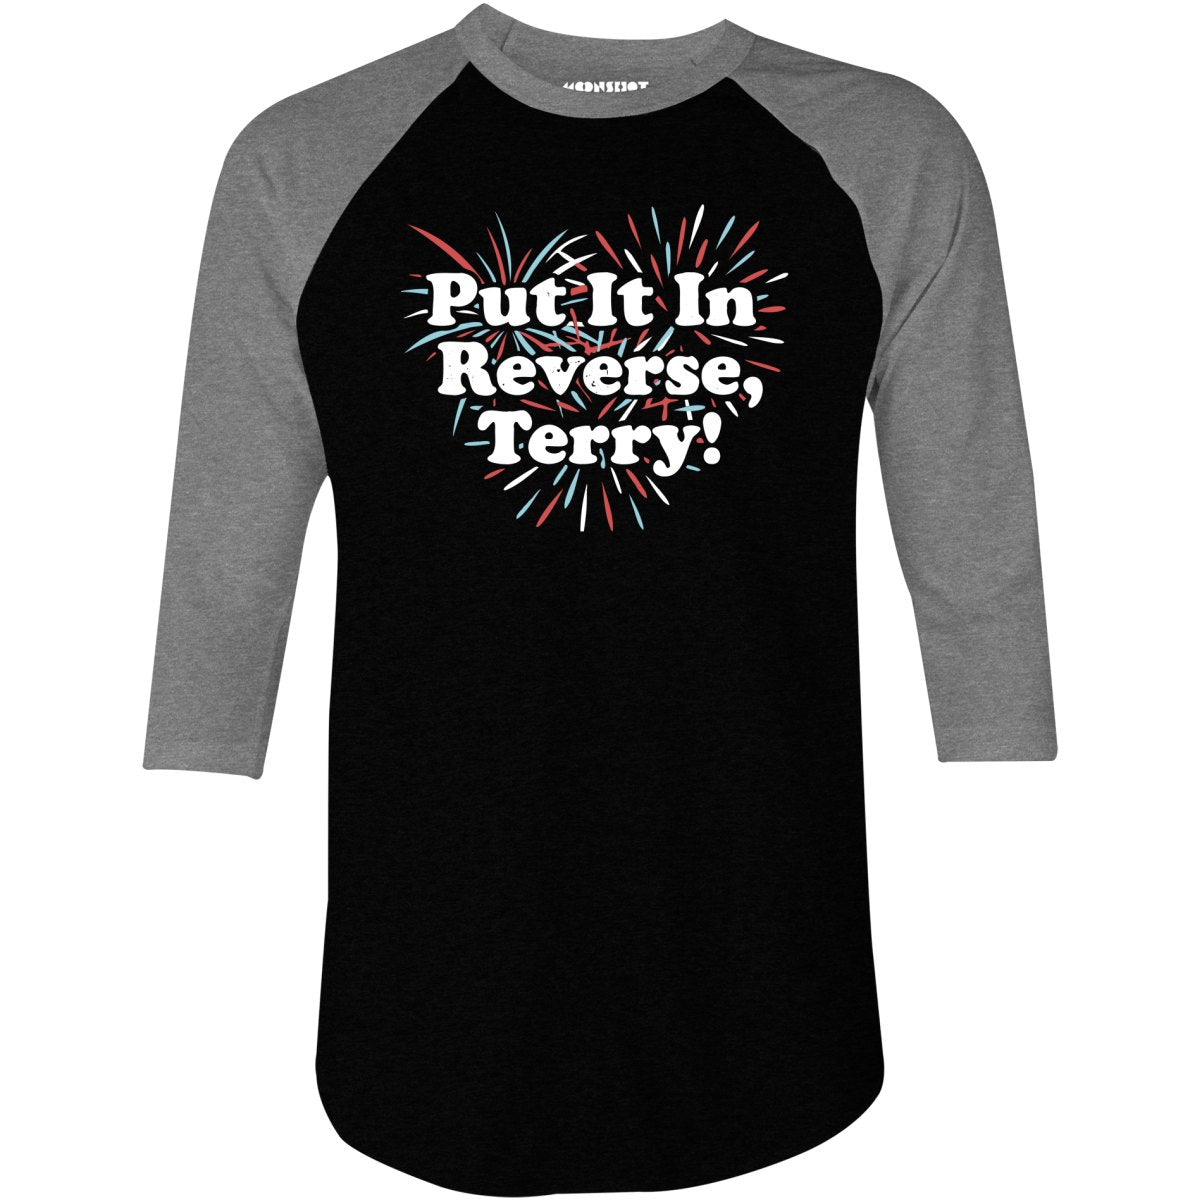 Put It In Reverse, Terry! - 3/4 Sleeve Raglan T-Shirt